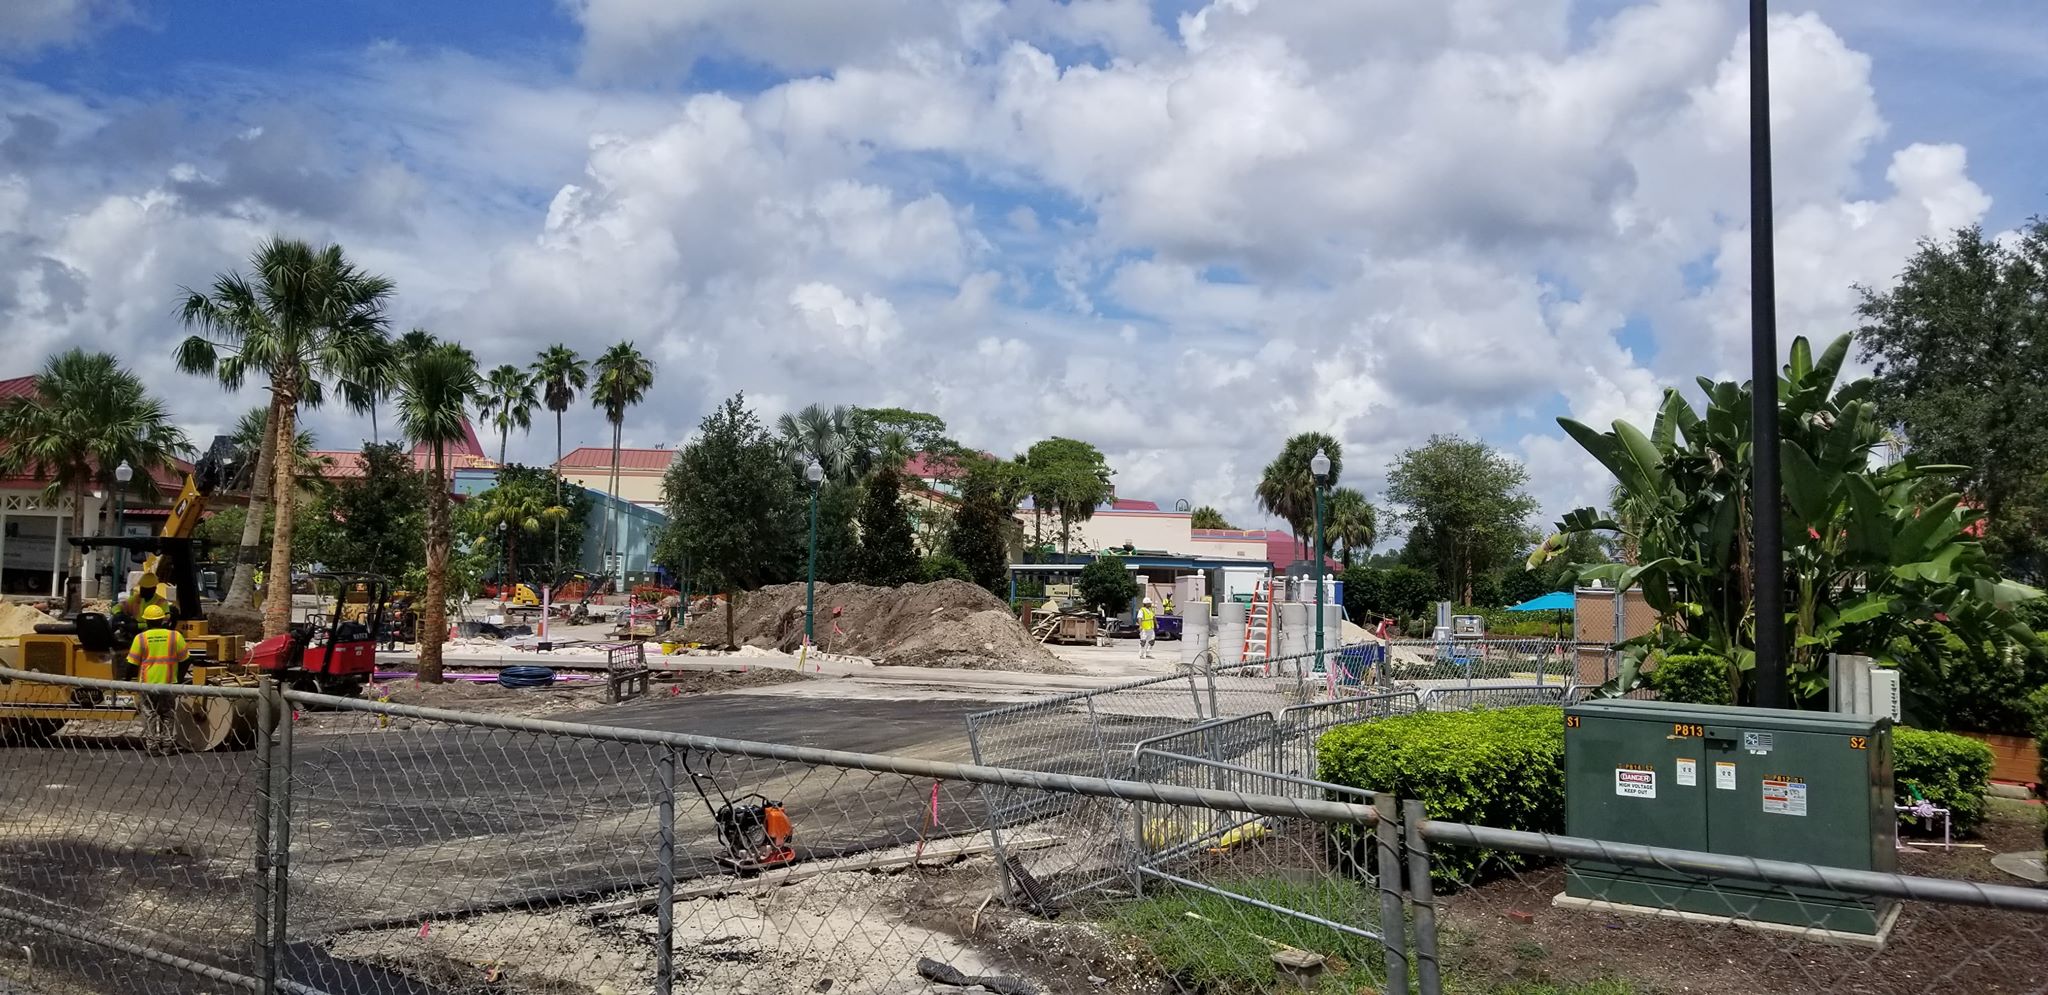 Construction Update at Disney’s Caribbean Beach Resort